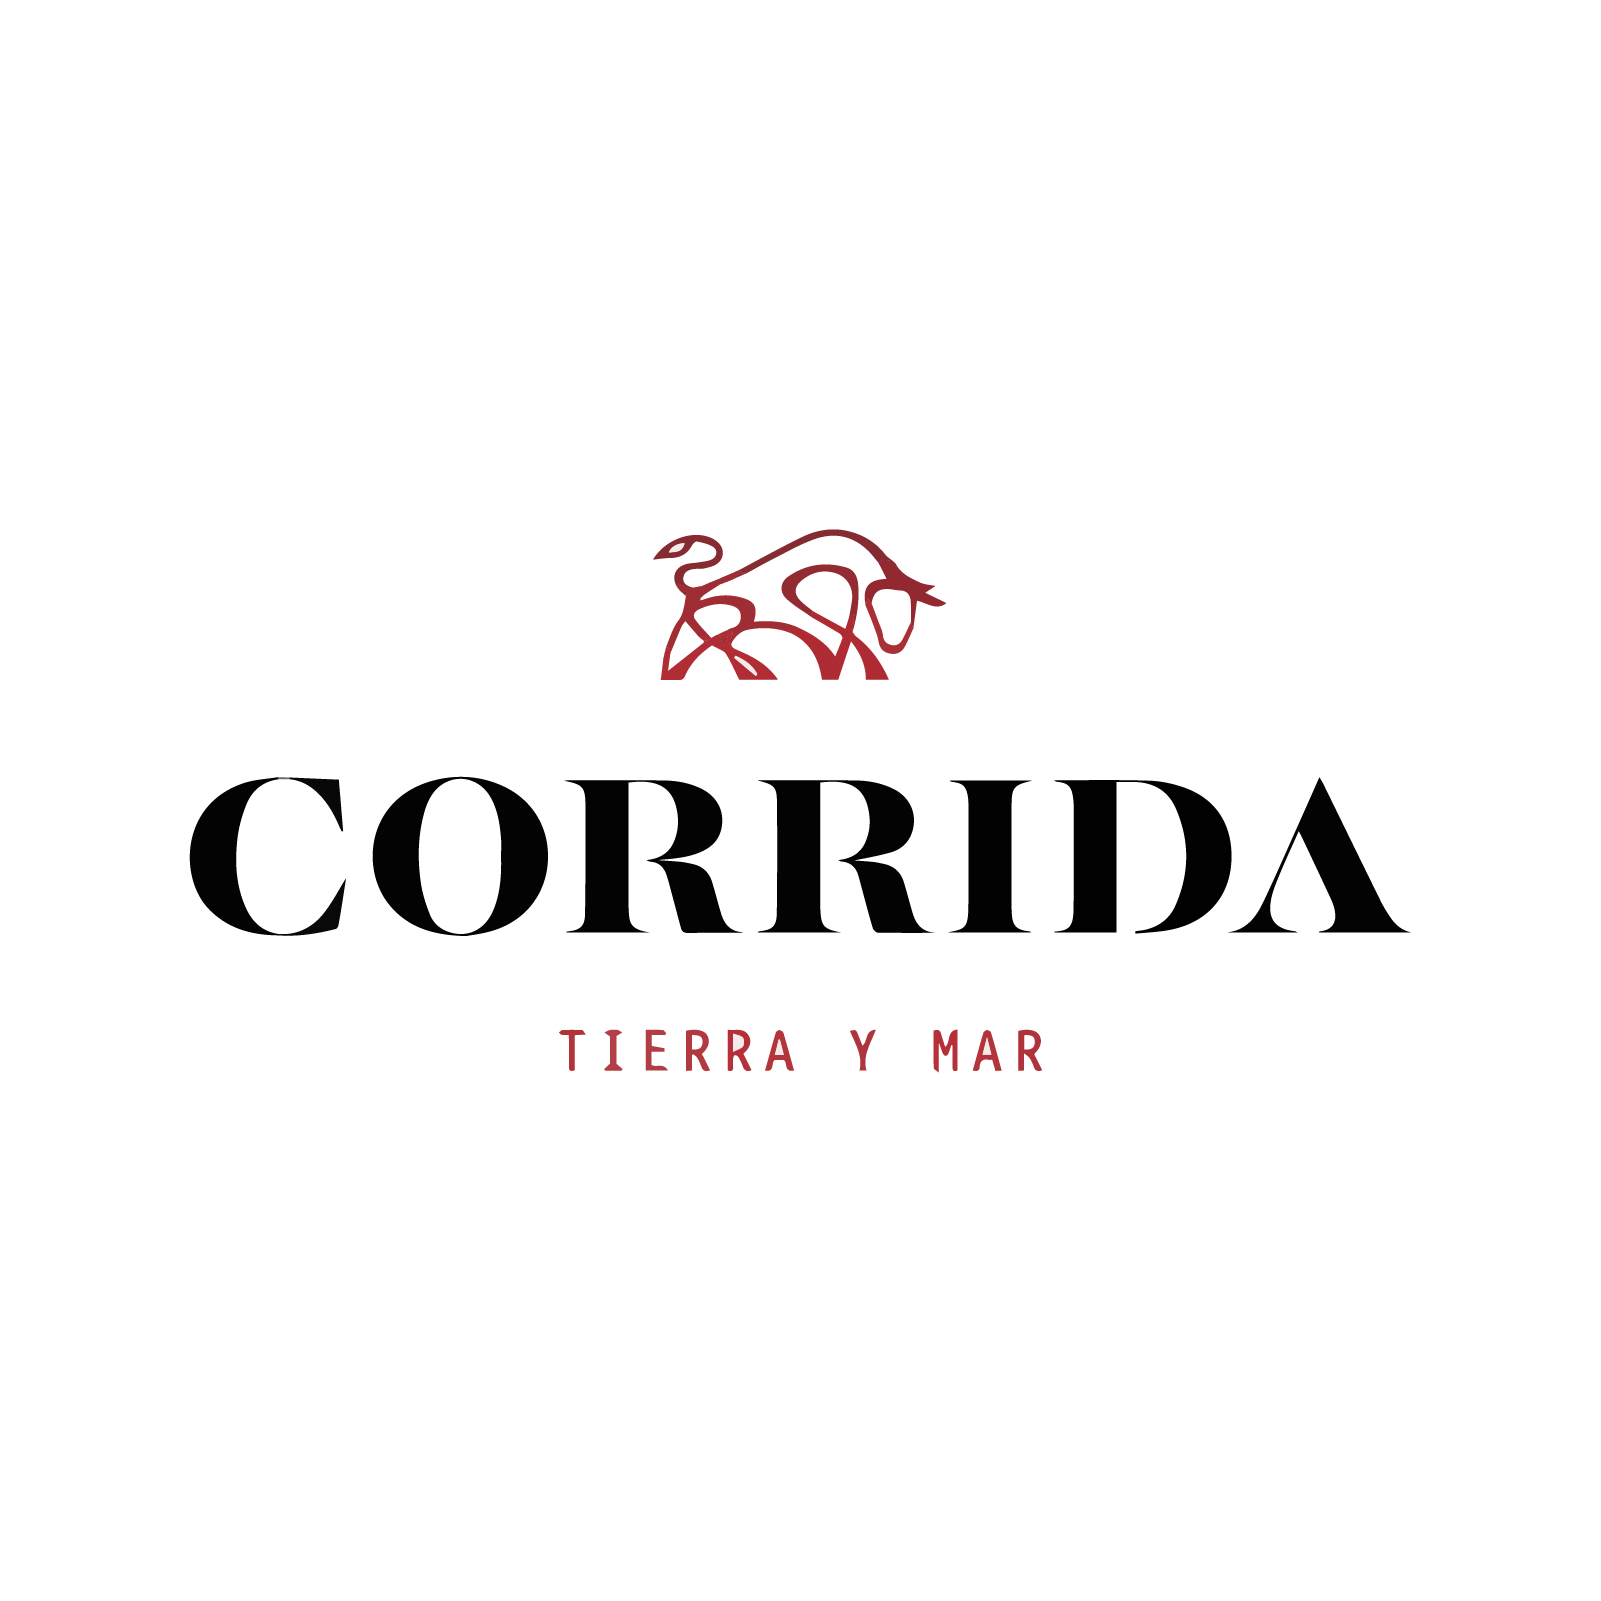 Press Logos_CORRIDA.png